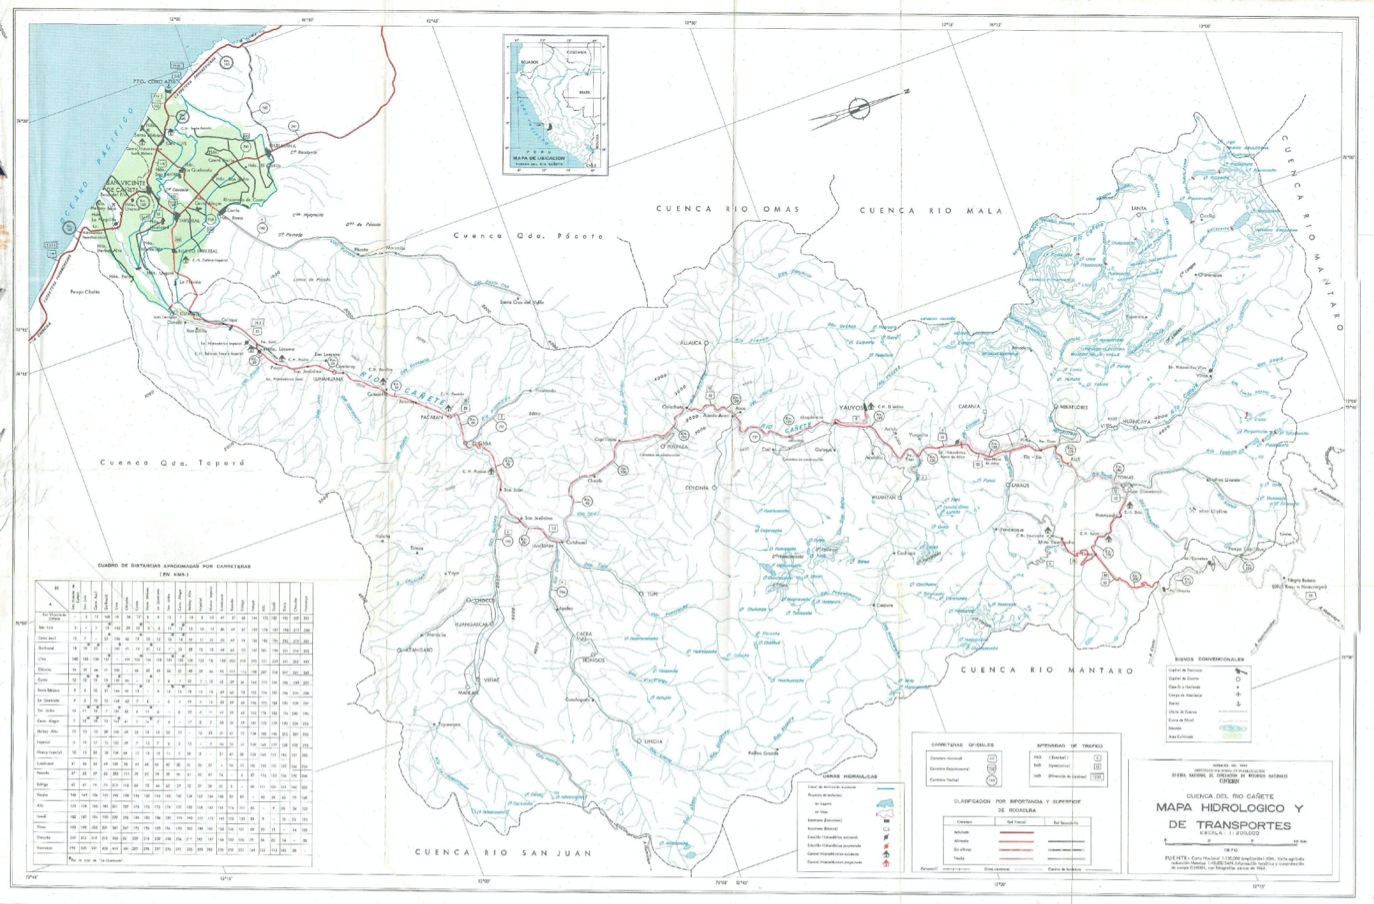 Hydrographic map of the Cañete Basin (from ANA “Cuenca del Rio Cañete” report, 1970)